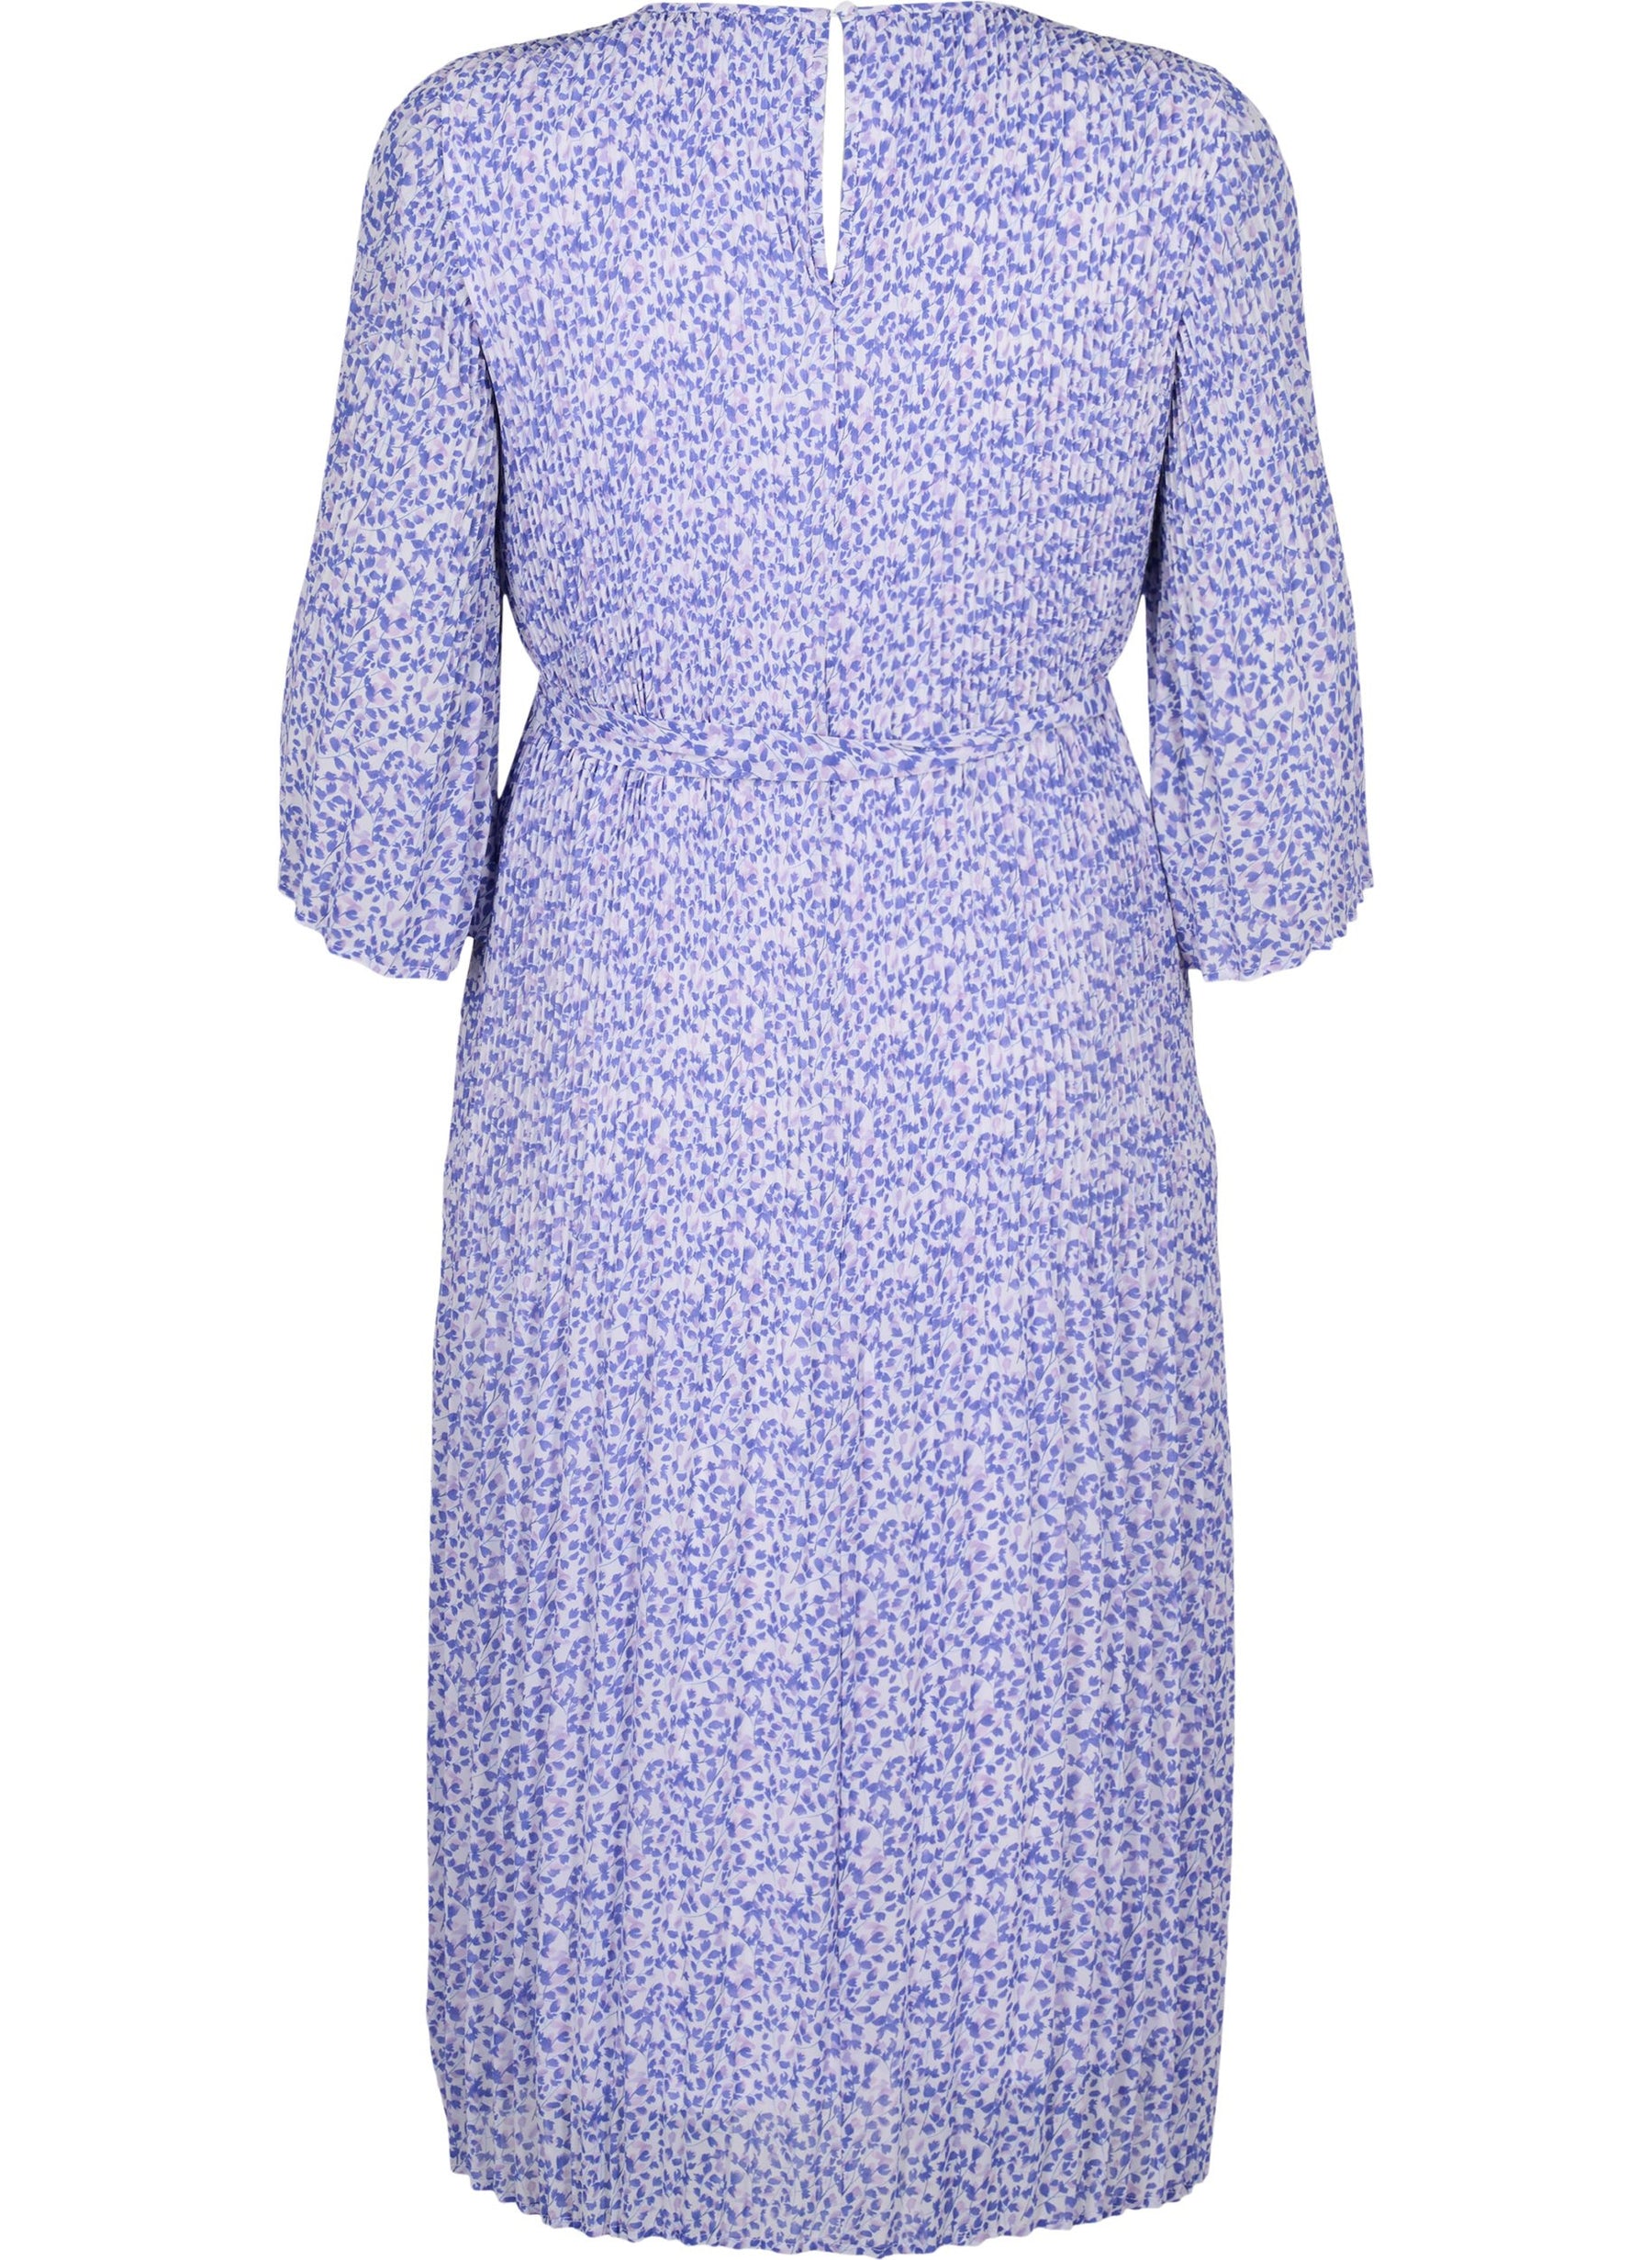 Zizzi Catherine Floral Lavender Dress